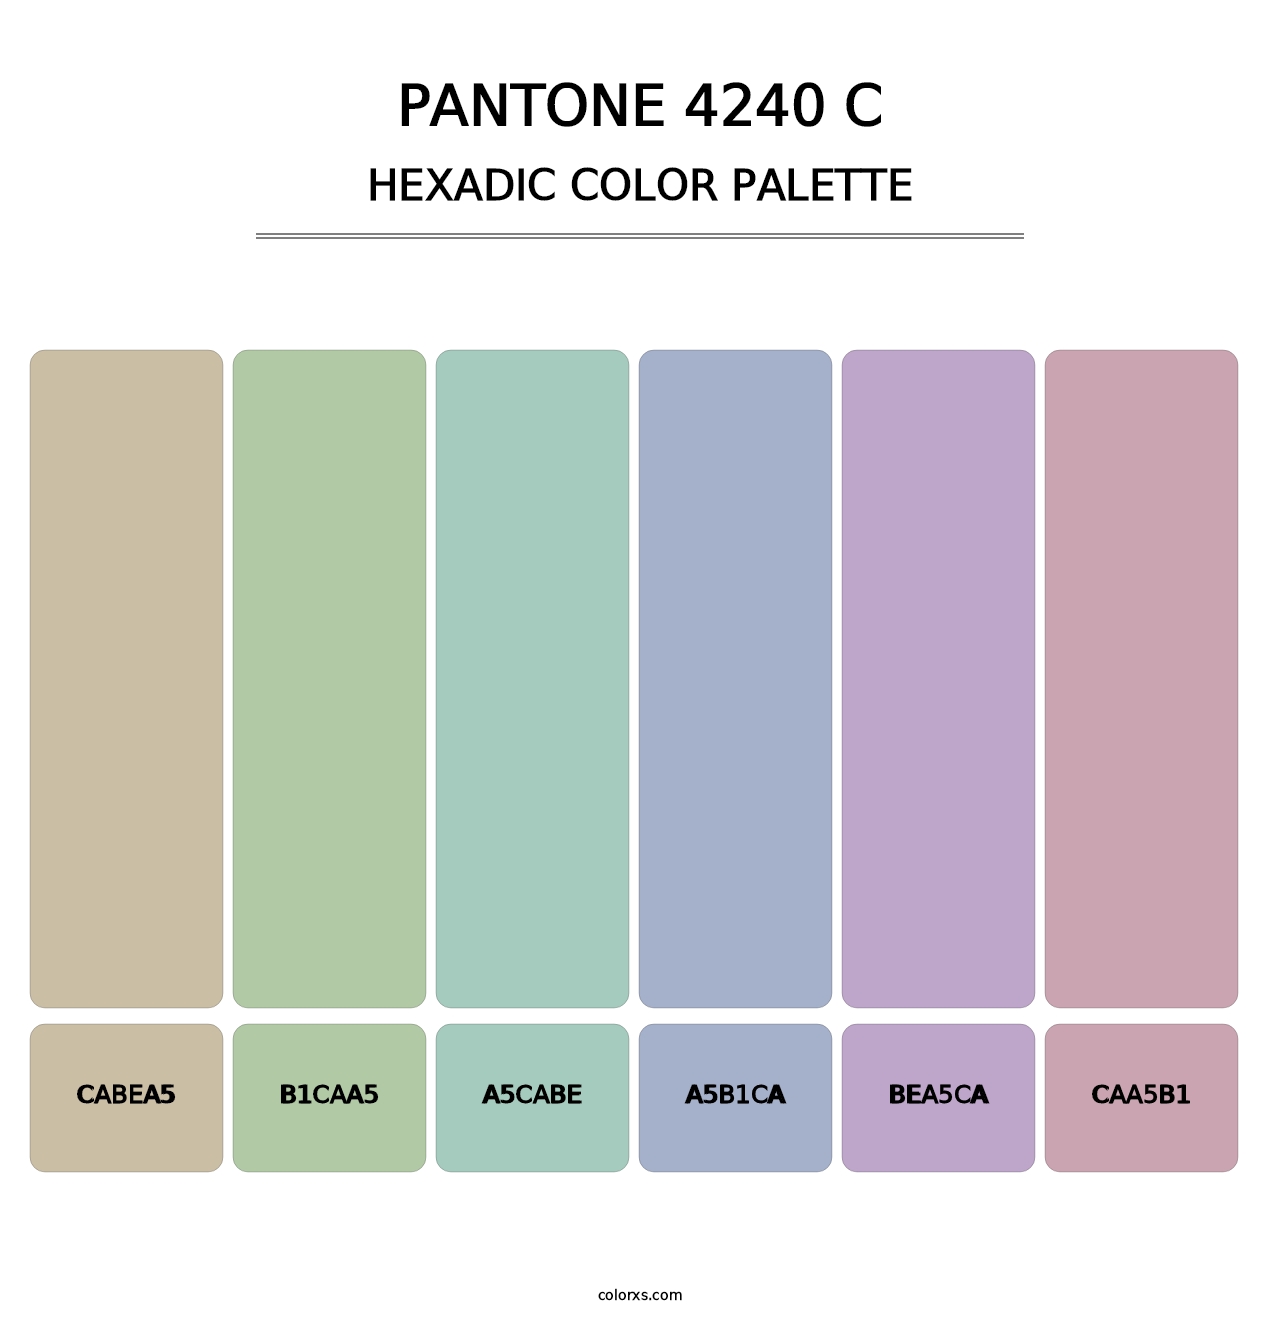 PANTONE 4240 C - Hexadic Color Palette